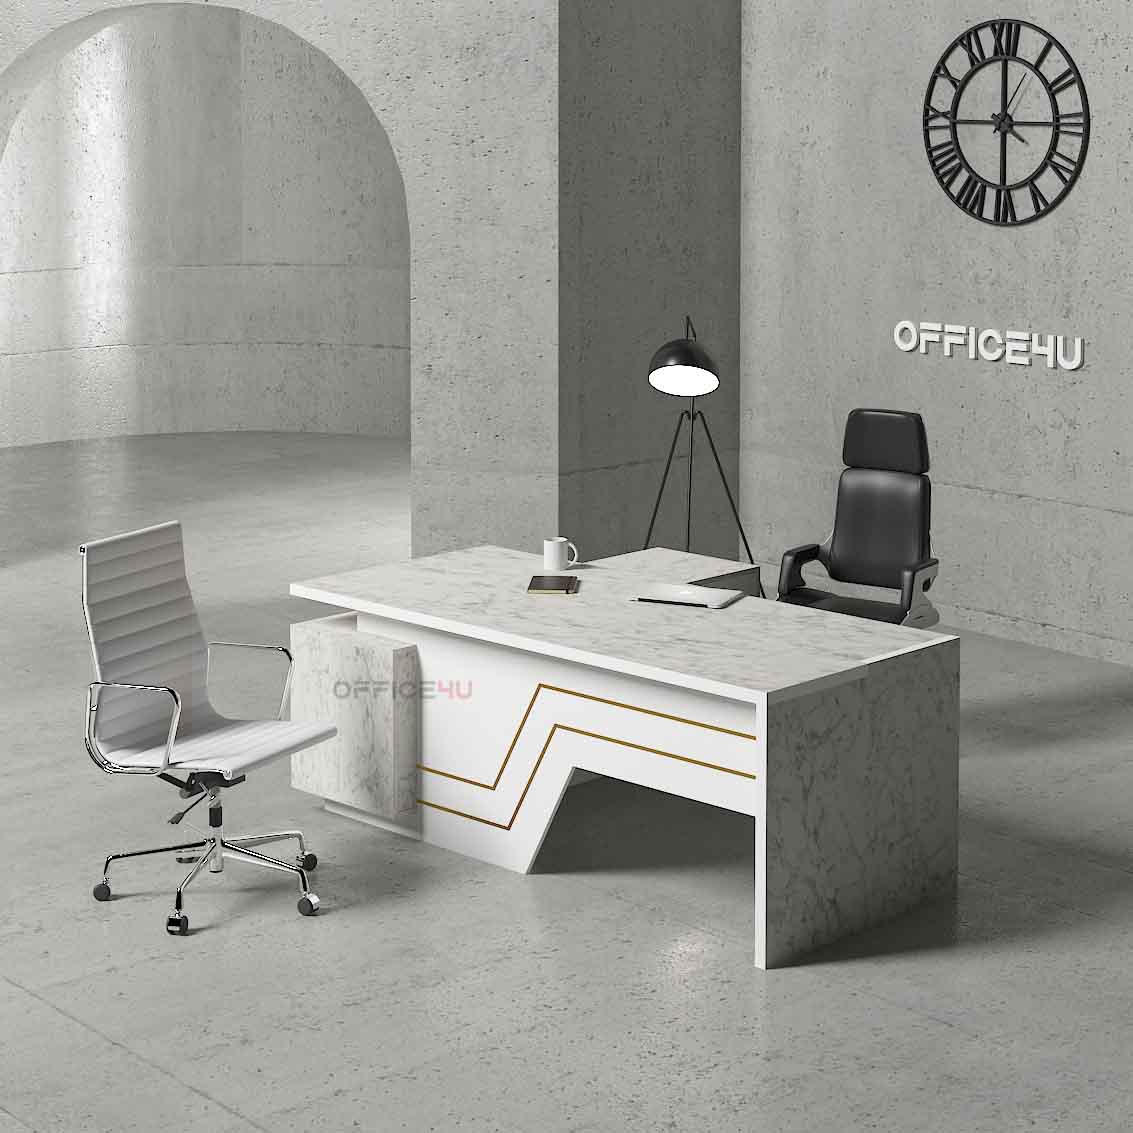 luxury-executive-office-furniture-UAE